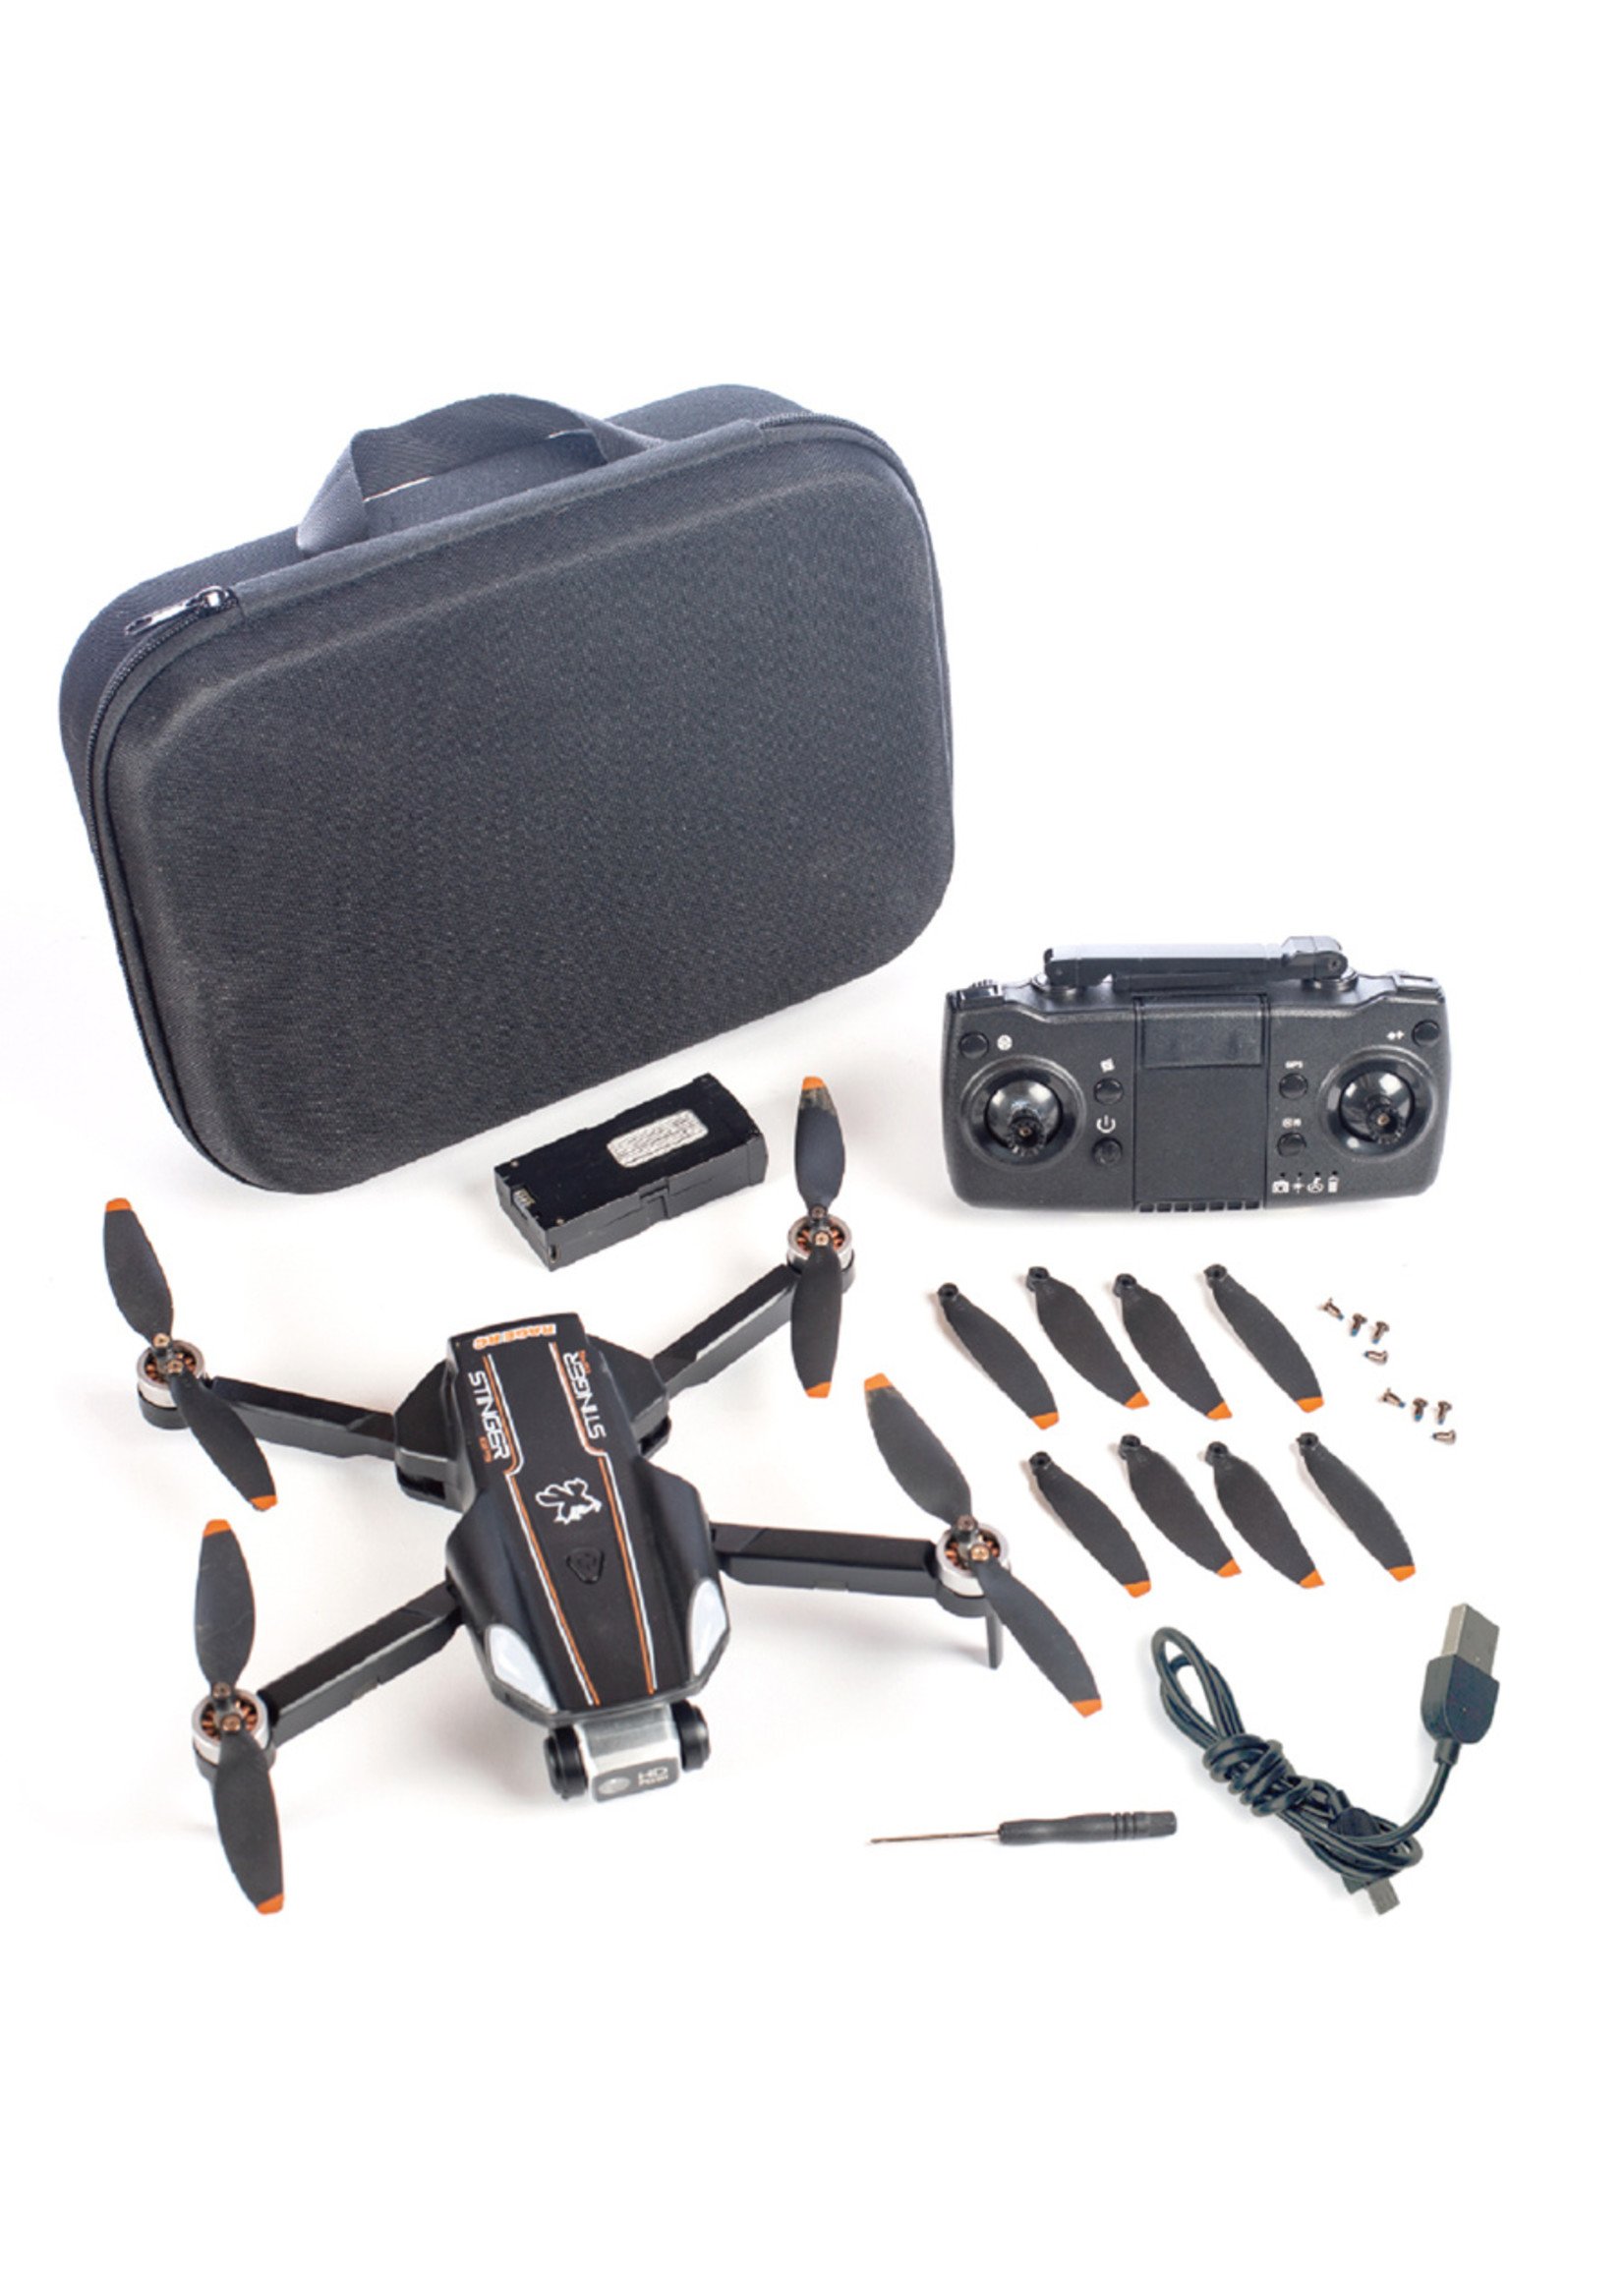 Rage RC RGR4450 - Stinger GPS RTF Drone with 1080p HD Camera